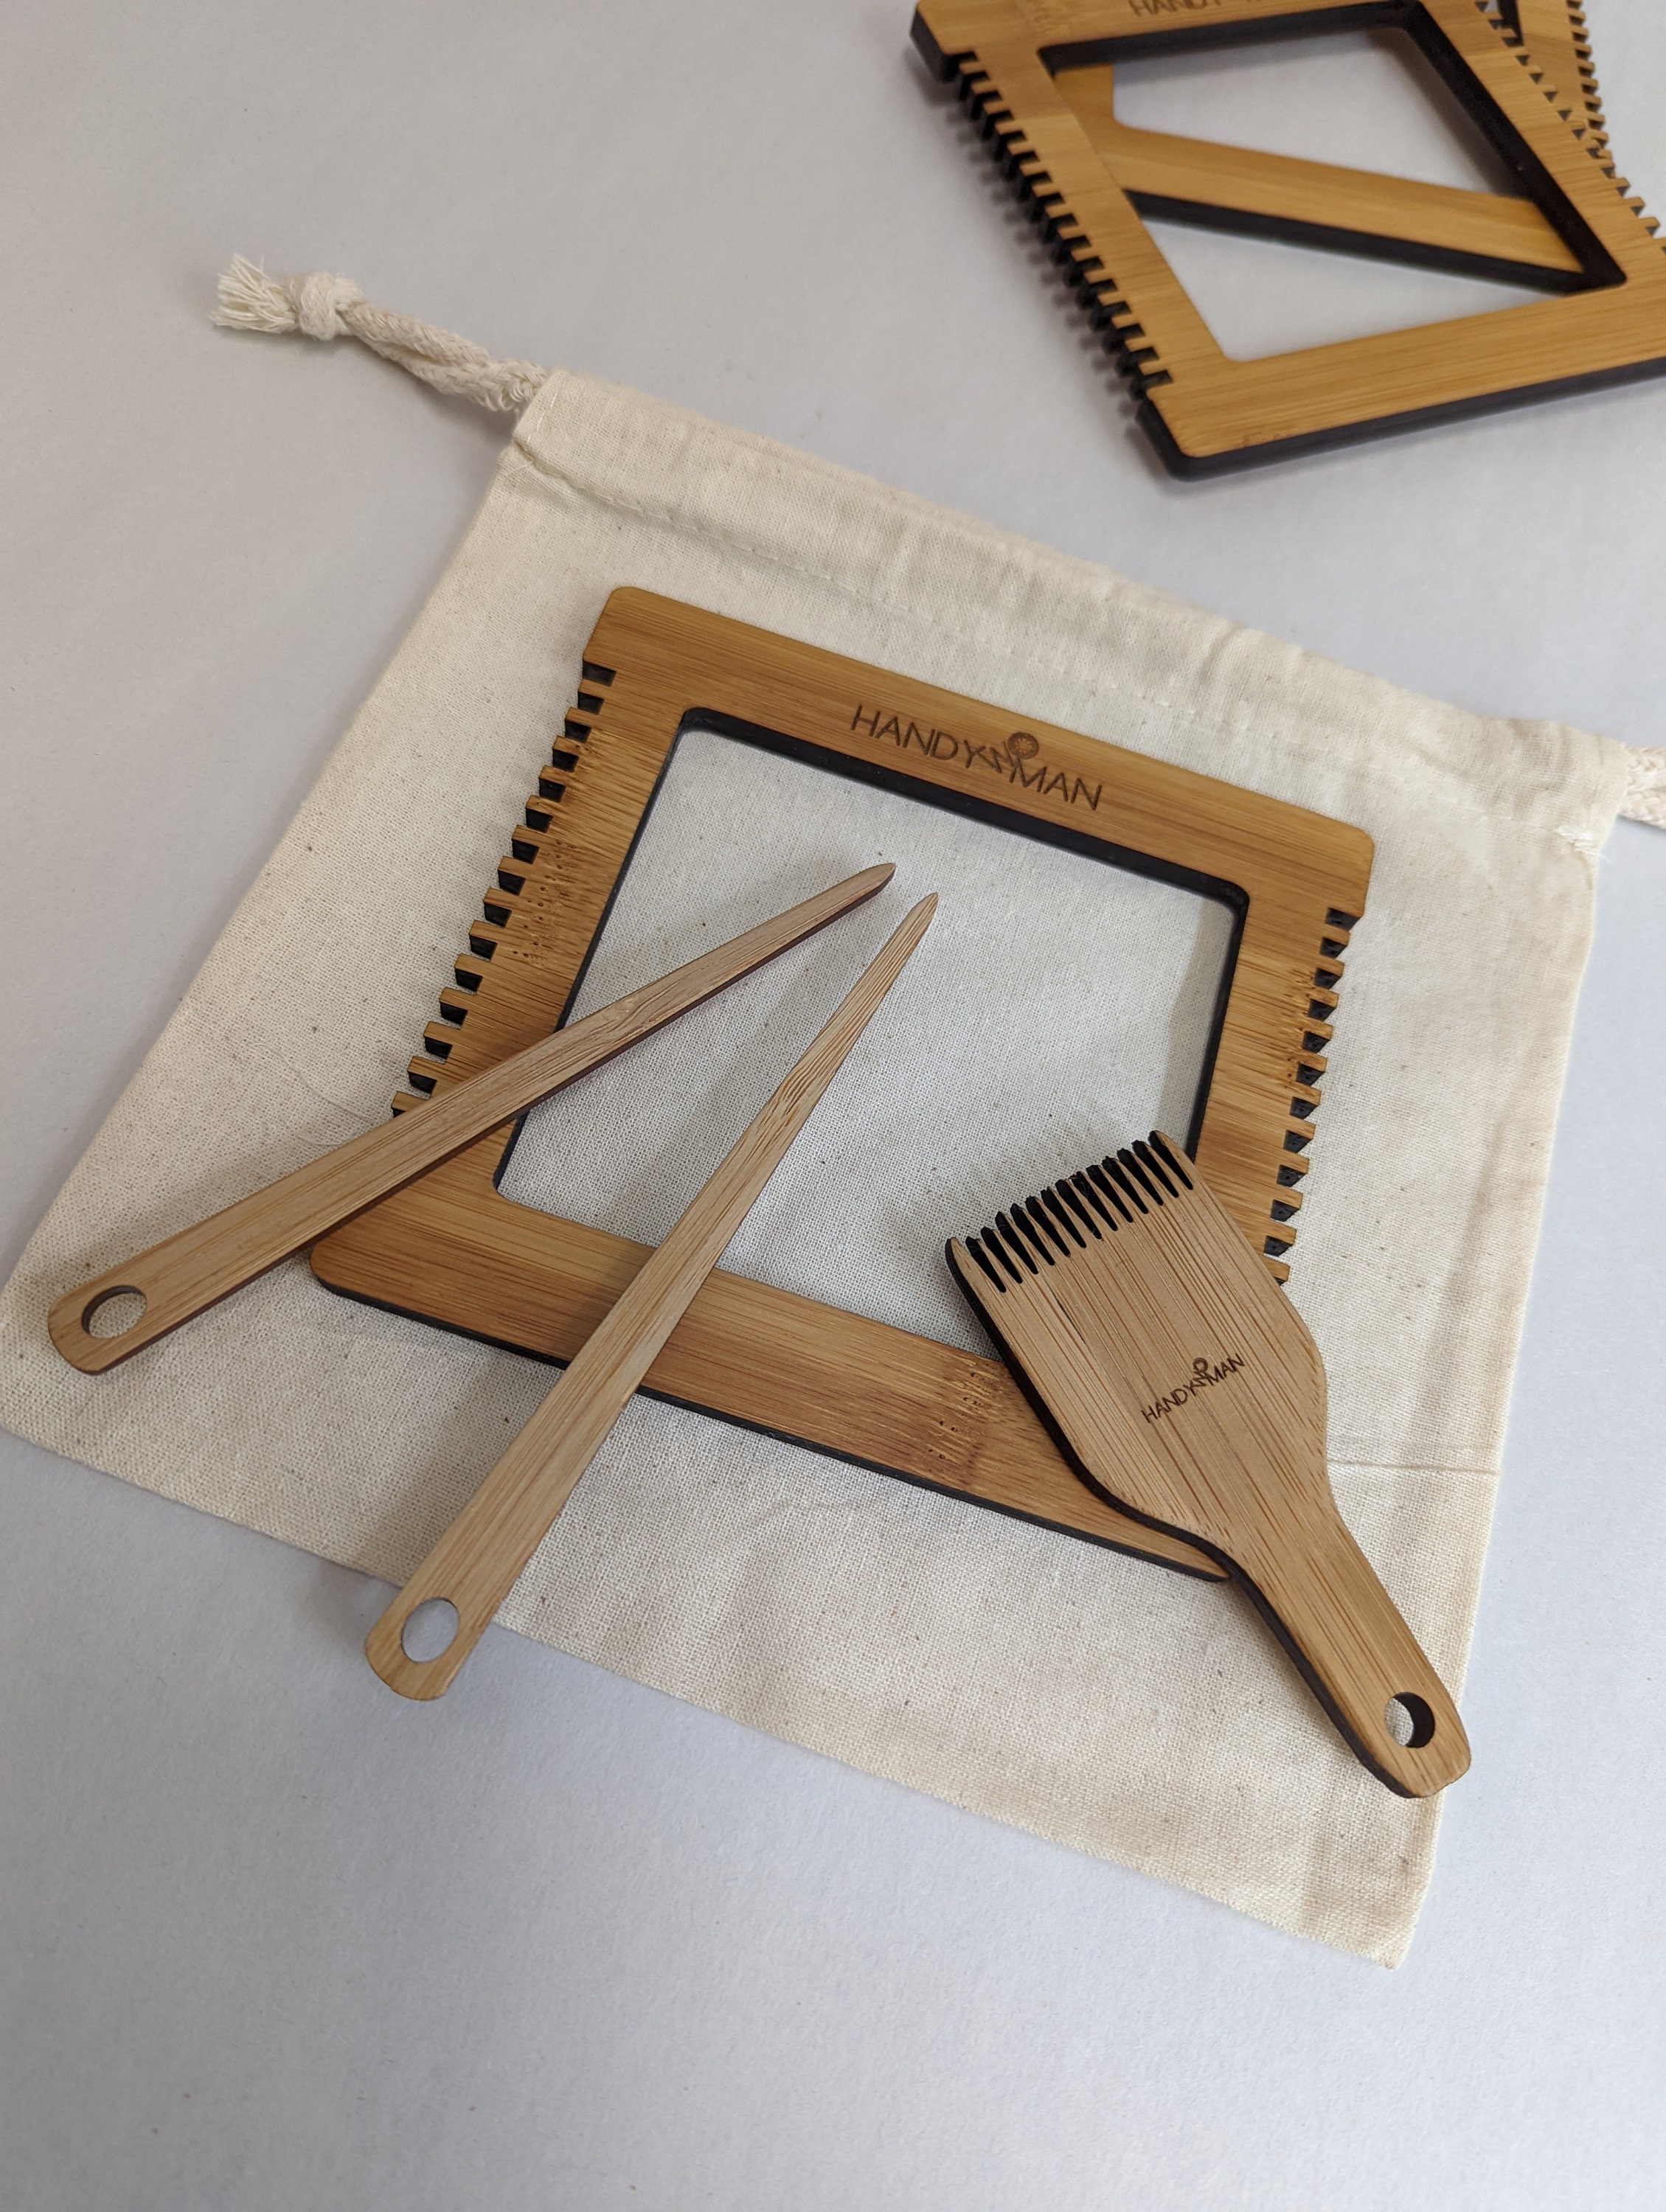 Mini Frame Loom for Diy.tapestry Loom for Beginners.loom for